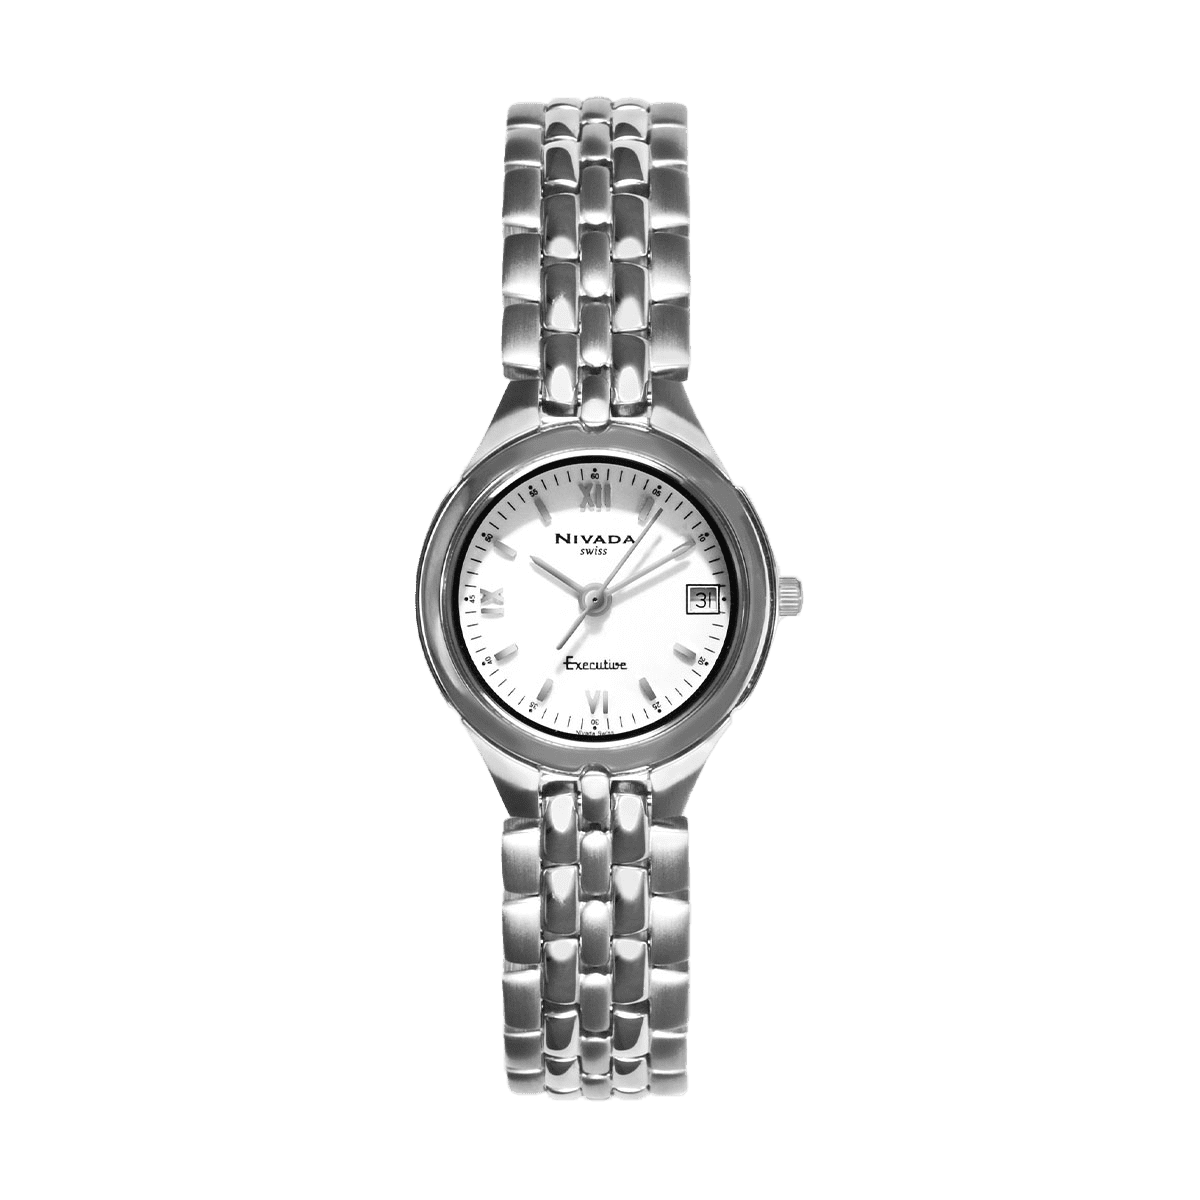 Executive Para Dama - Altitud 3293 - Reloj Nivada Swiss